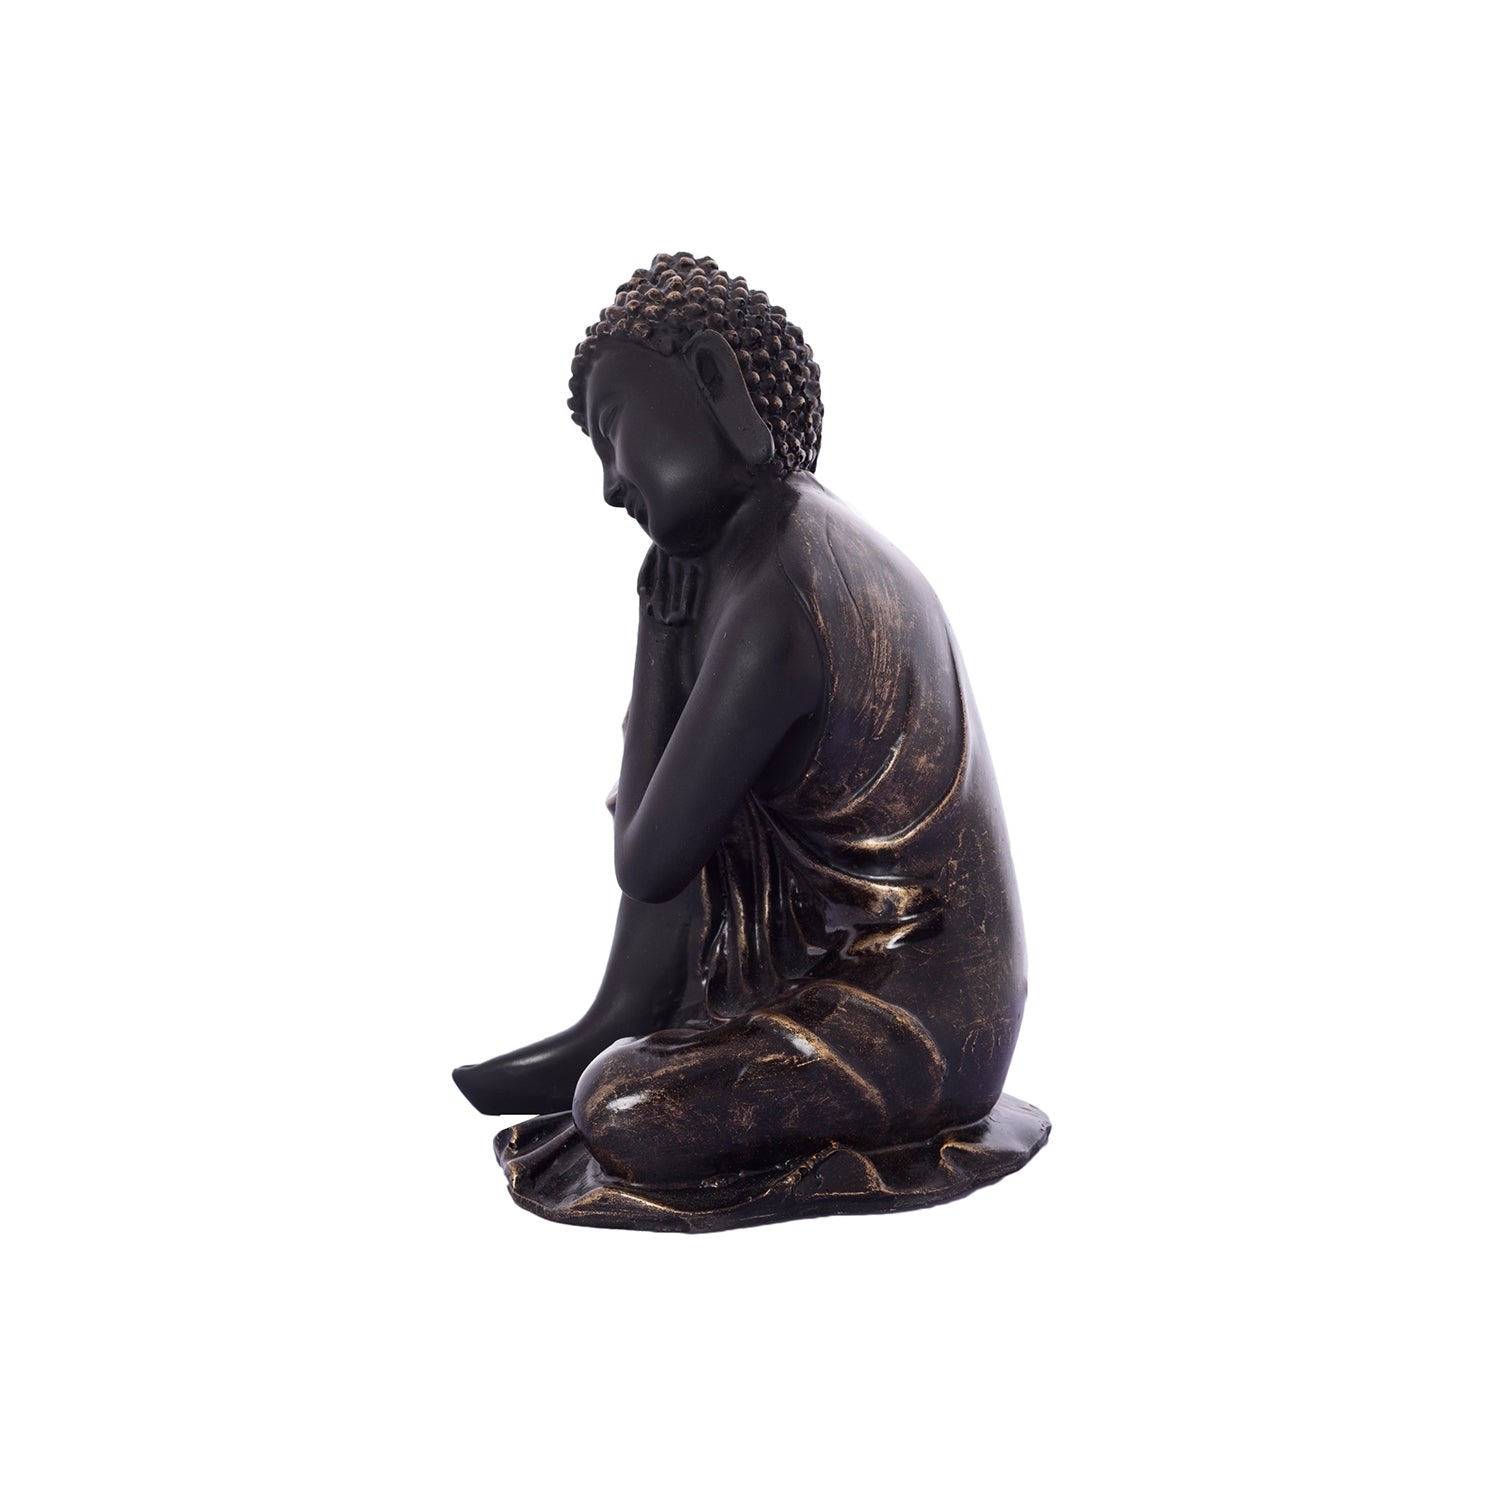 Polyresin Black Resting Buddha on Knee Statue 5